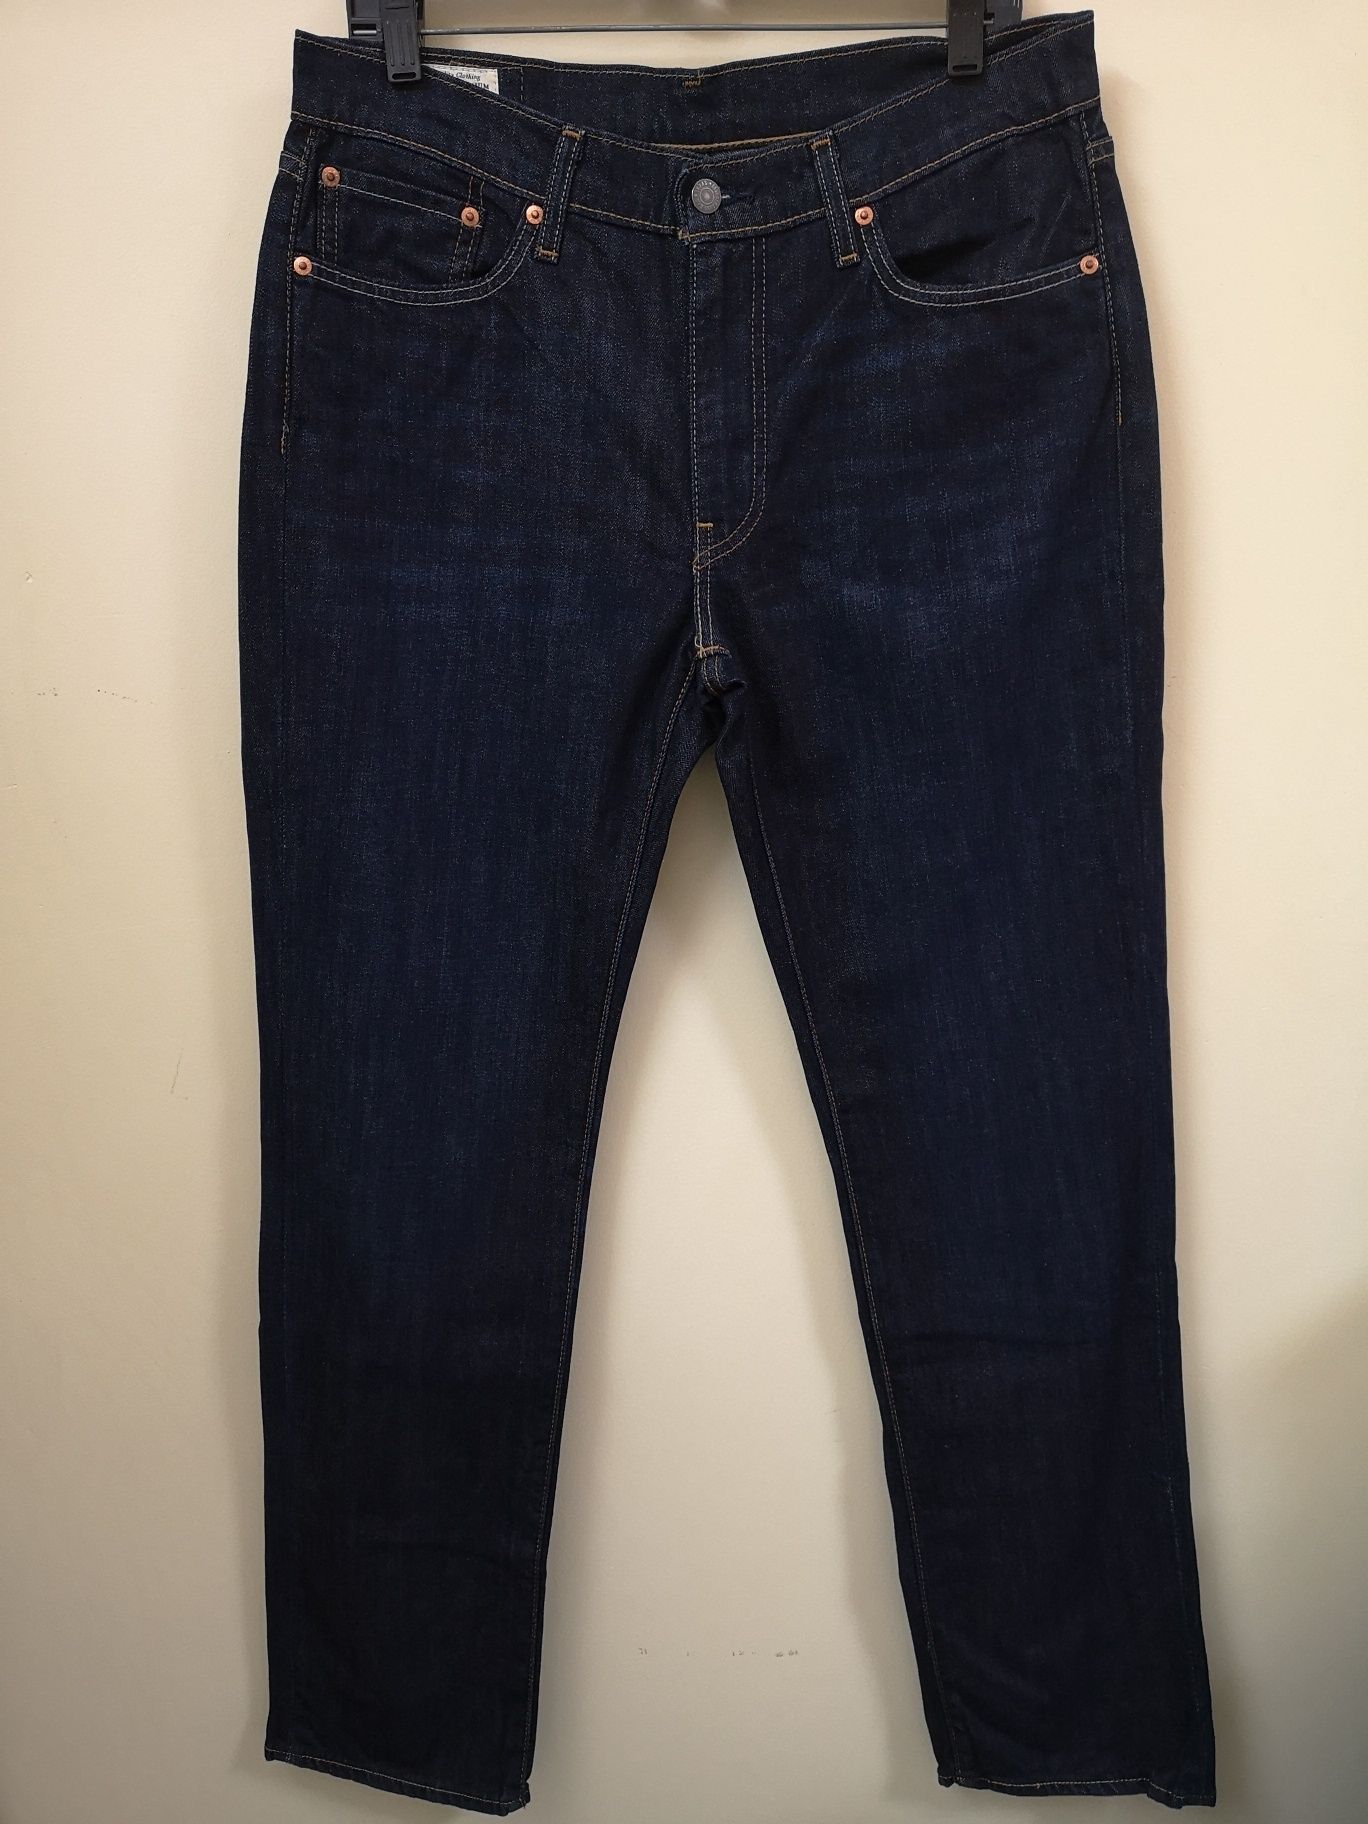 Levis Strauss jeans W33 L34